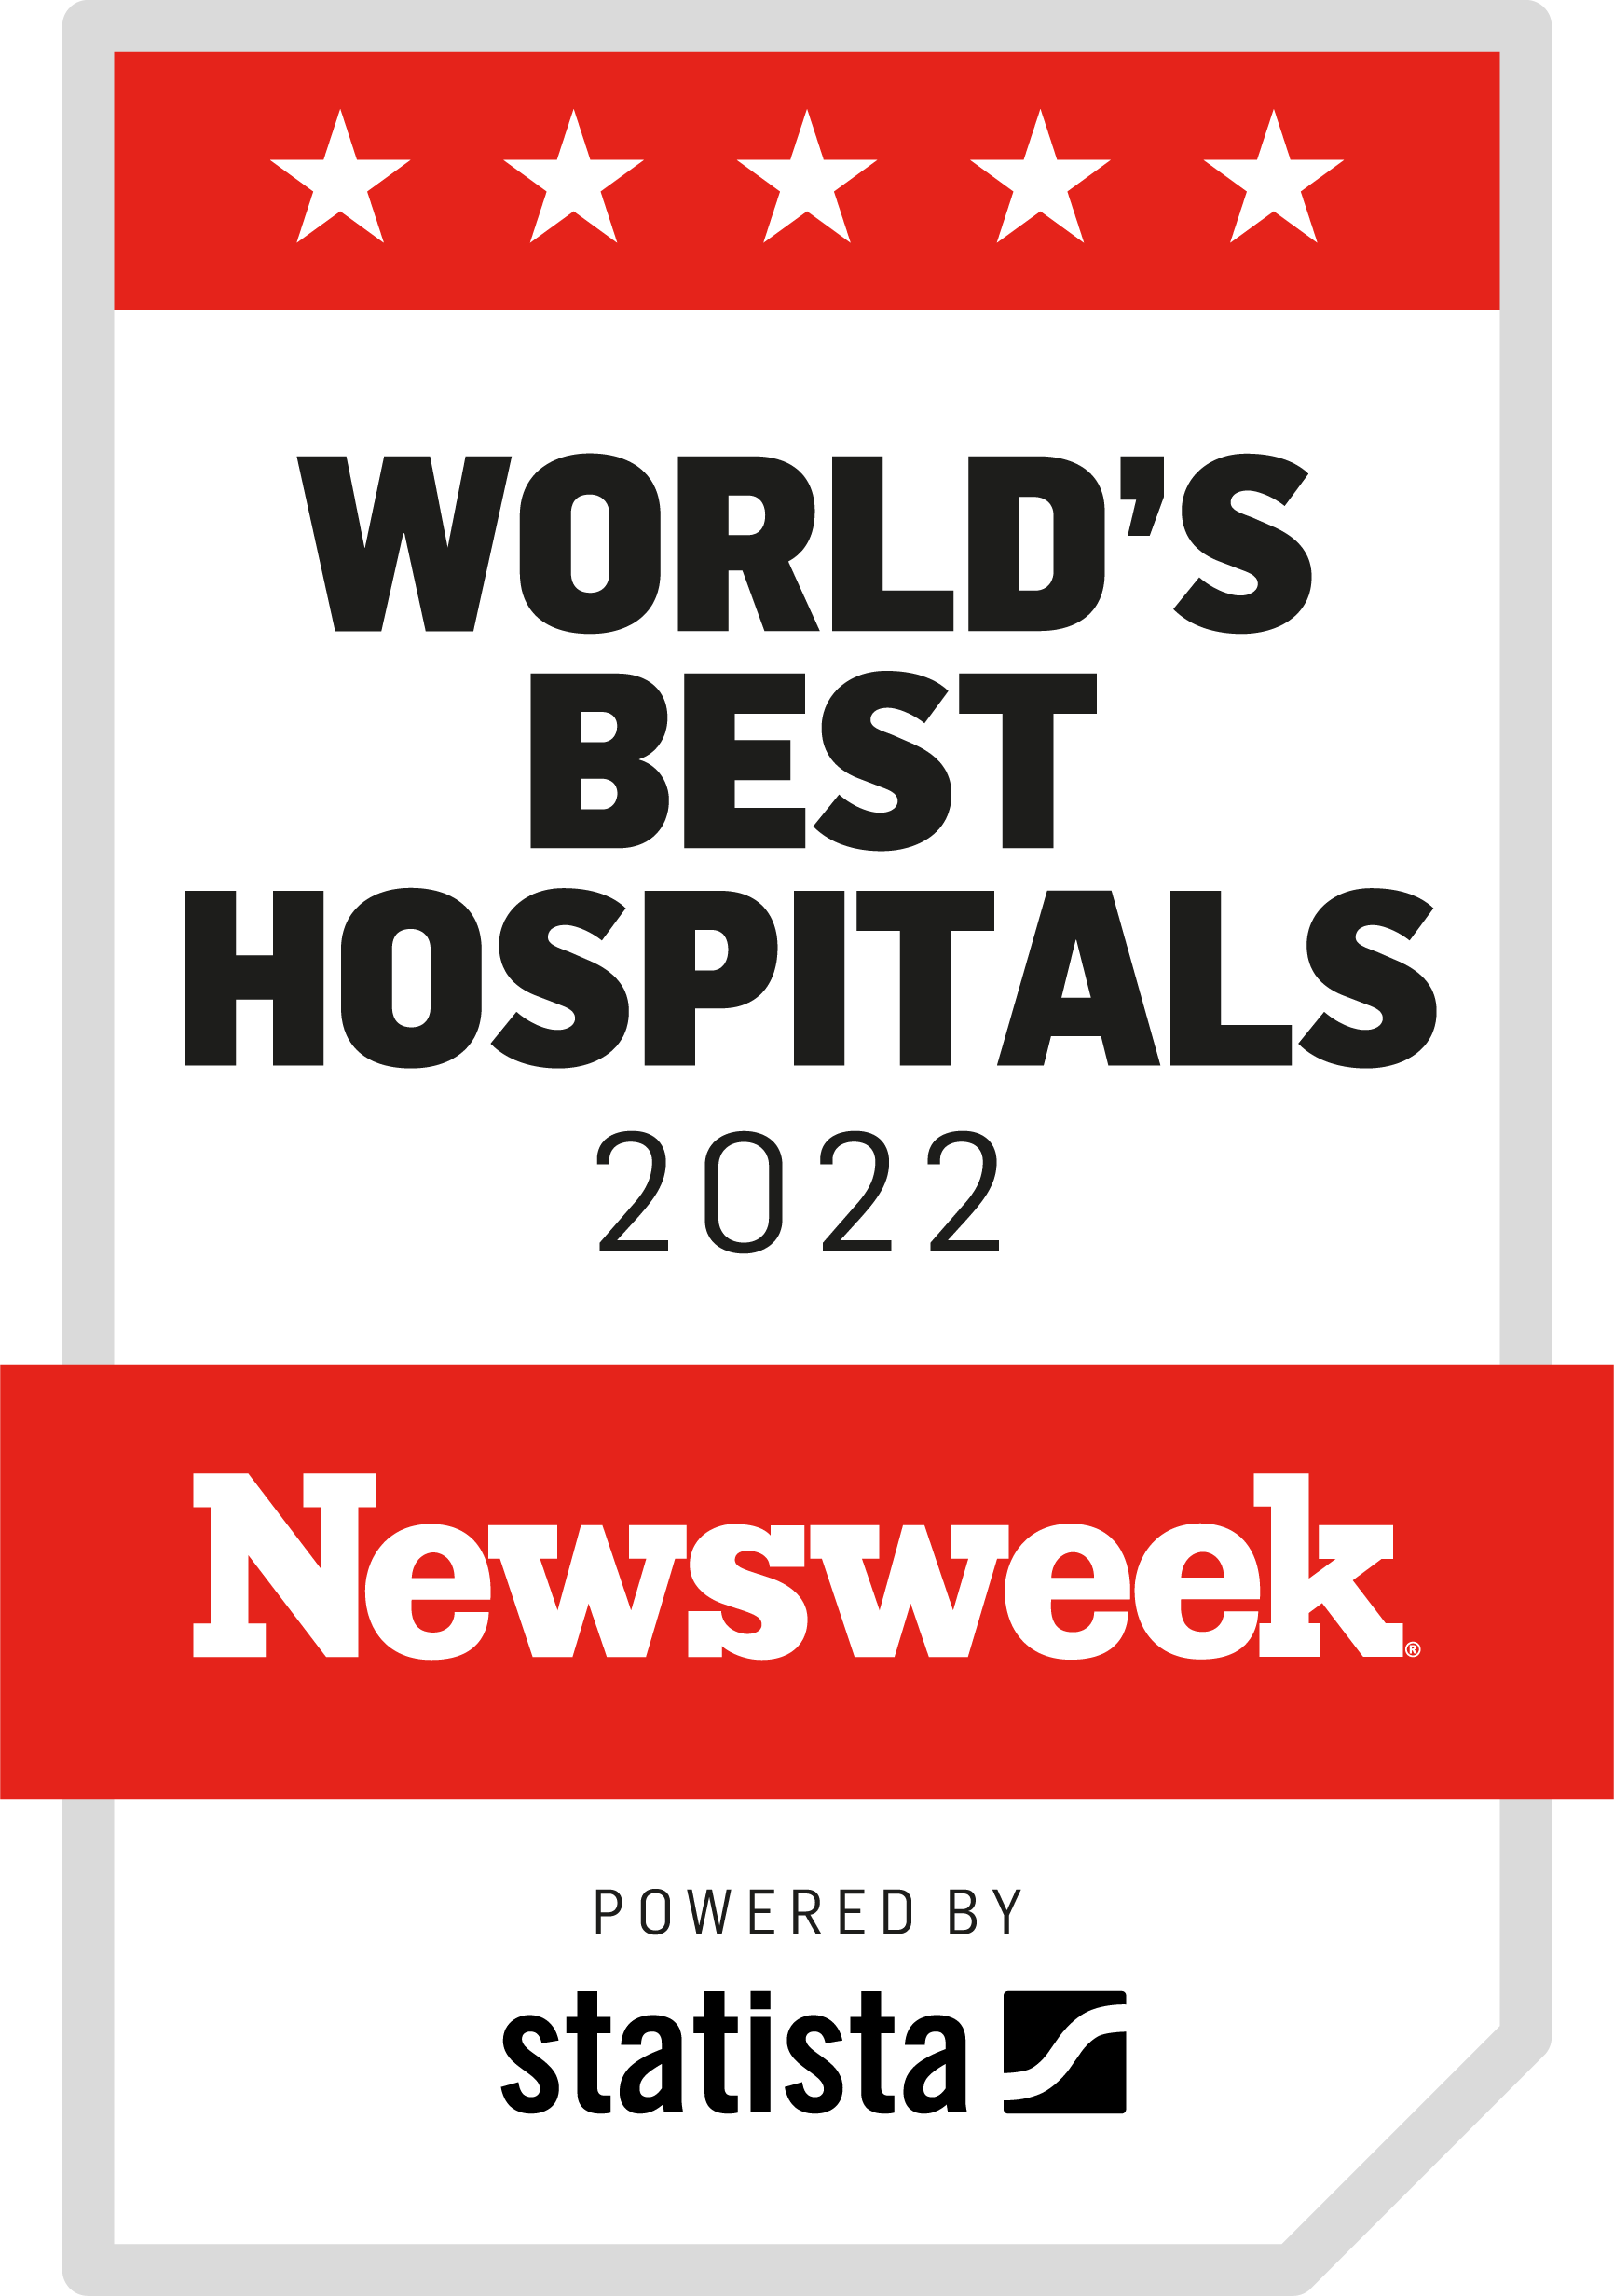 Newsweek's World's Best Hospitals 2022 logo